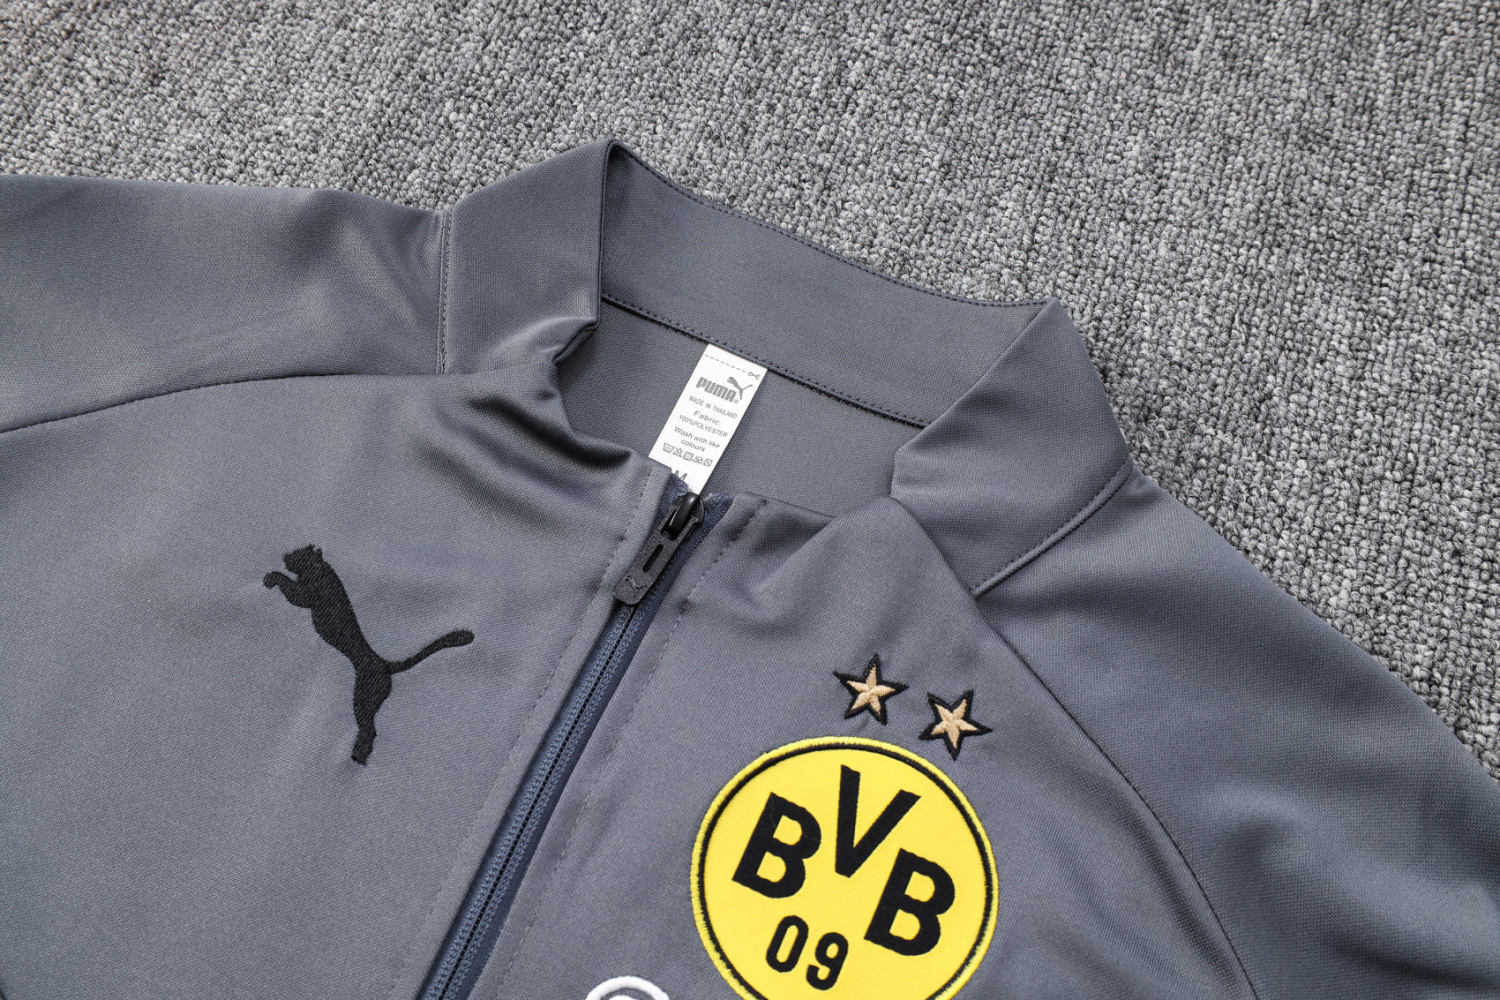 Borussia Dortmund Soccer Jacket + Pants Replica Grey 2022/23 Mens